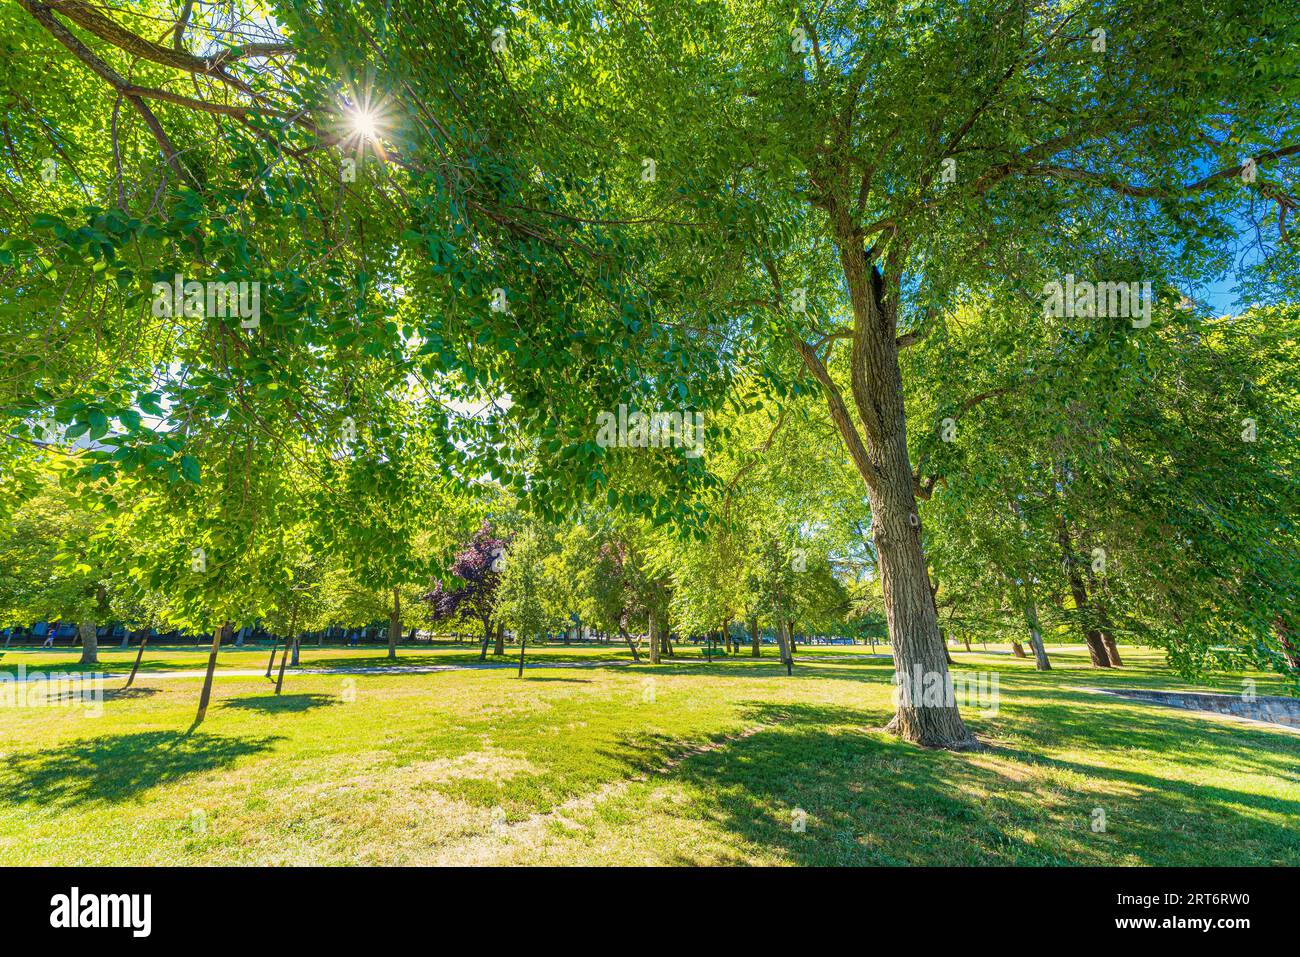 Public Park in a city. Vibrant Green Trees. Leisure landmark Stock Photo